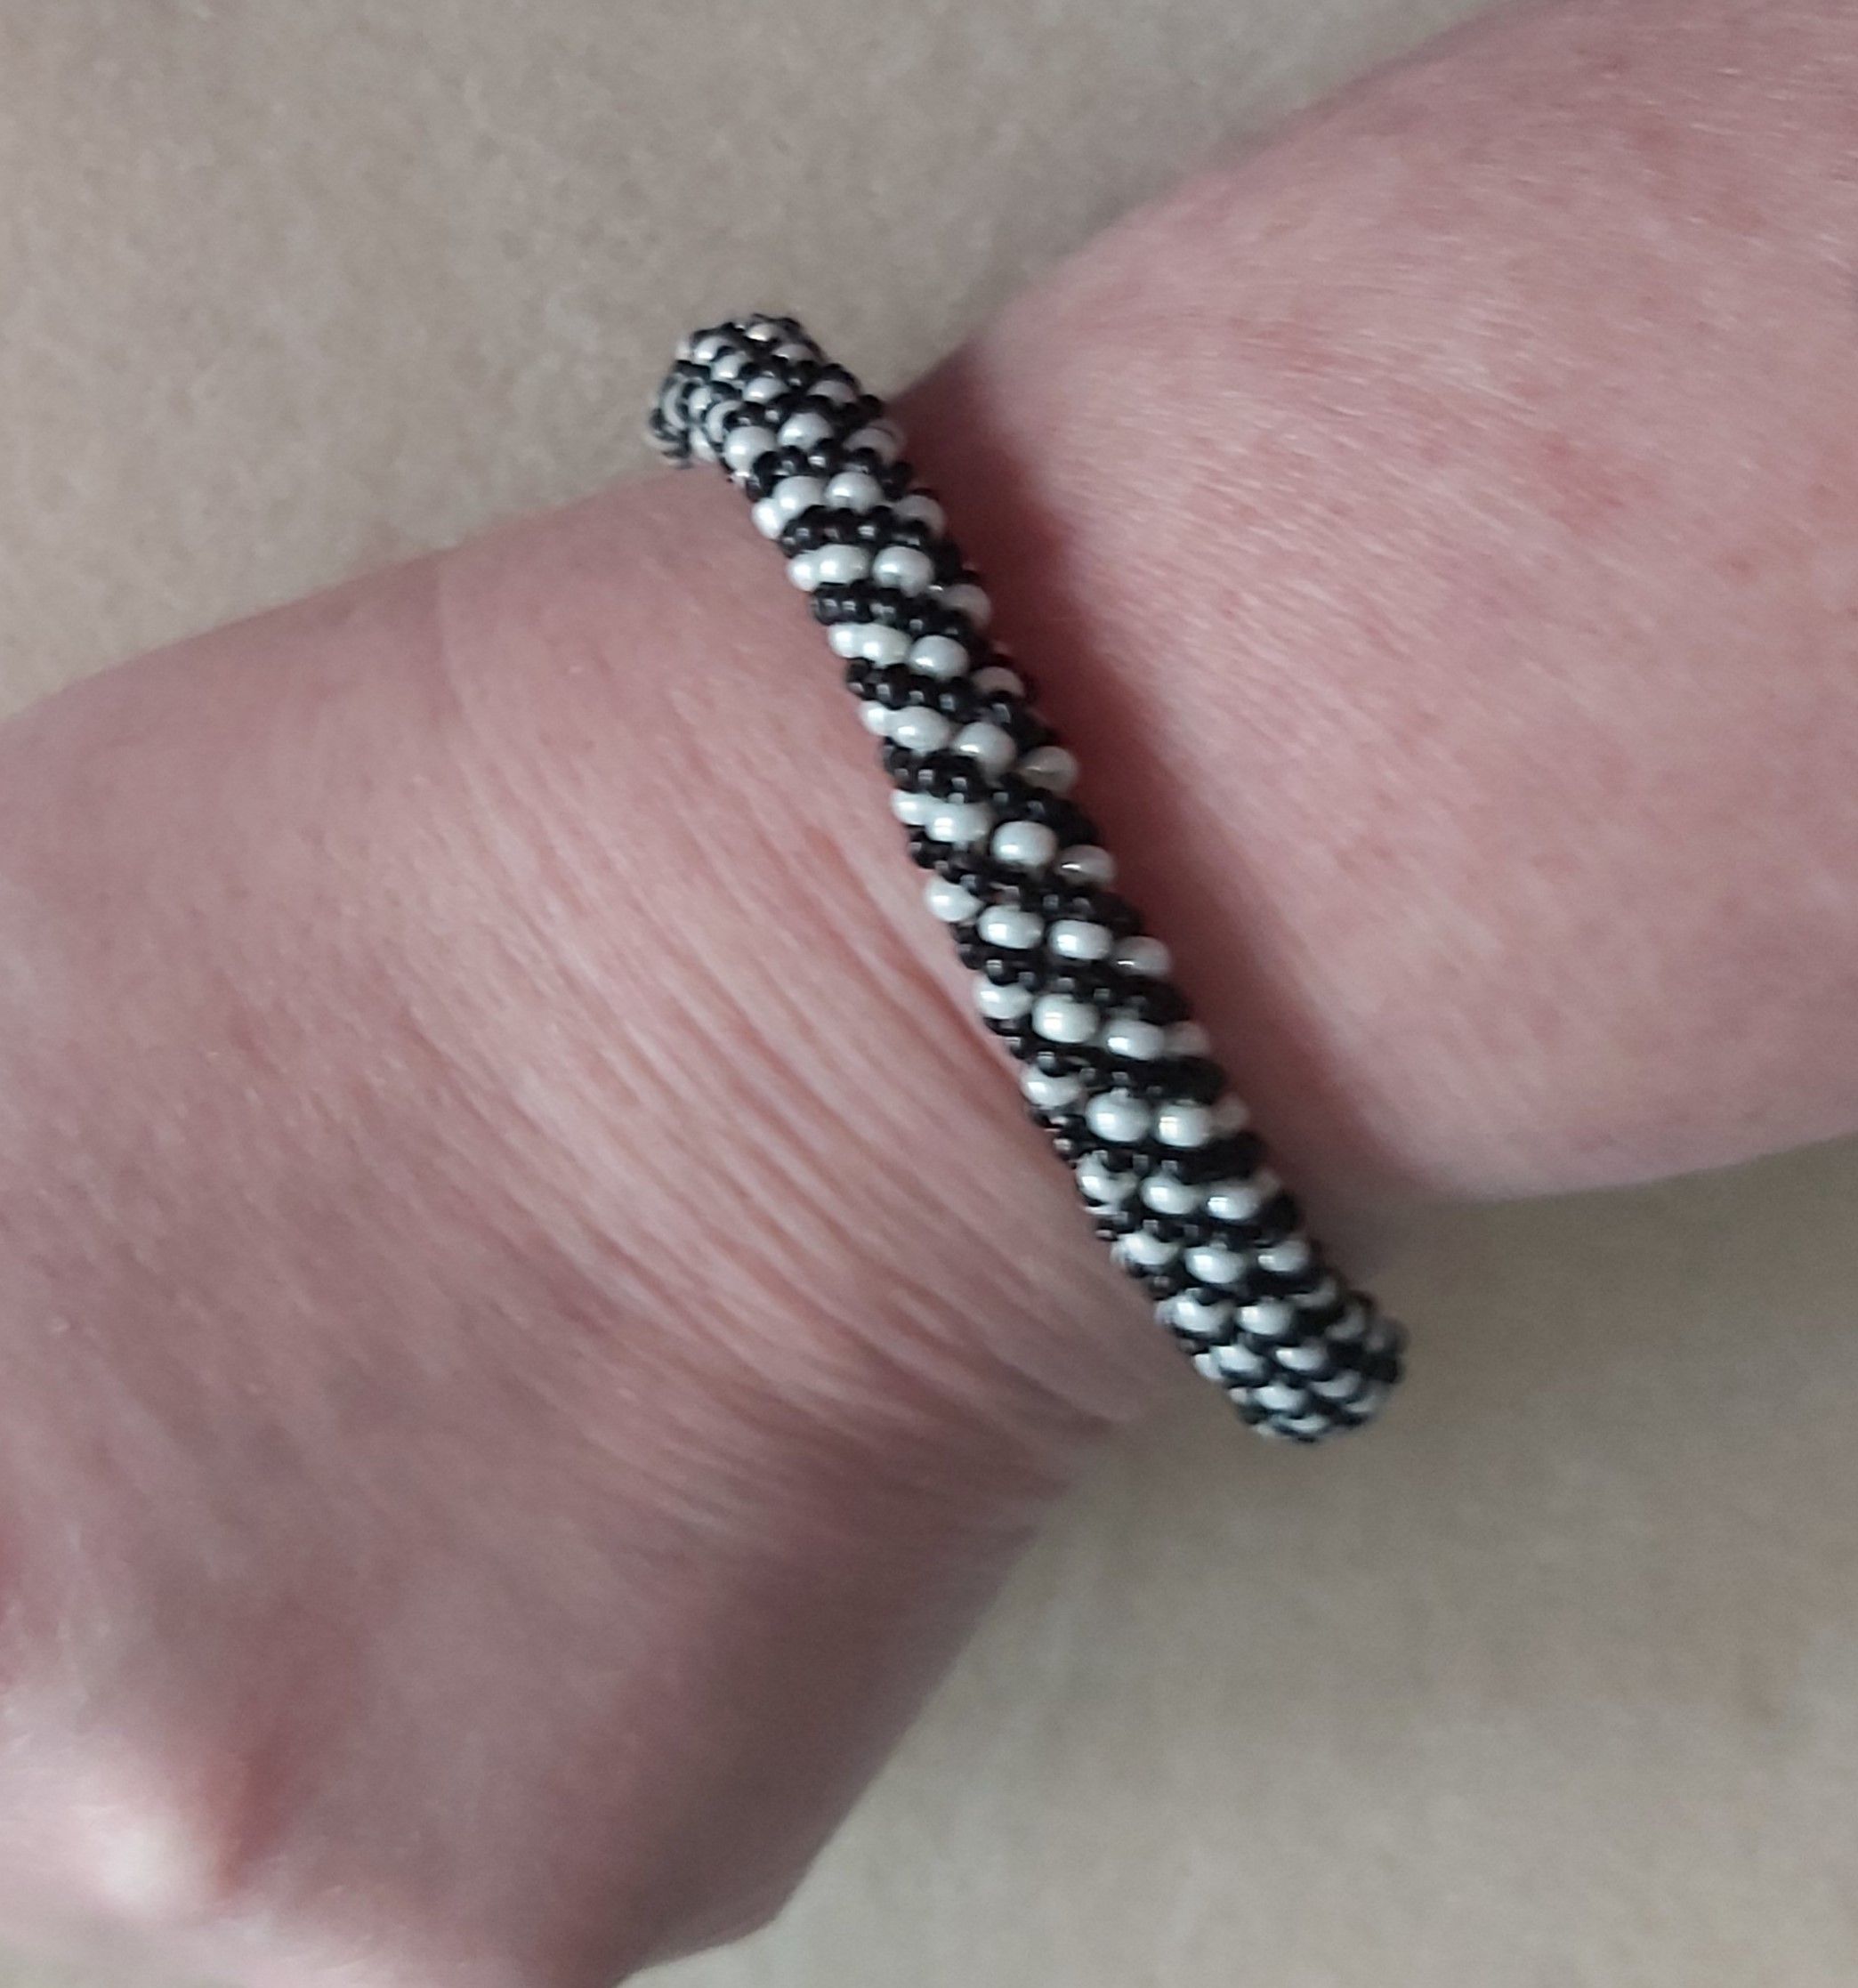 Russian Spiral stitch Bracelet  - Black & White Miyuki 8/0 Seed Beads 7.5"